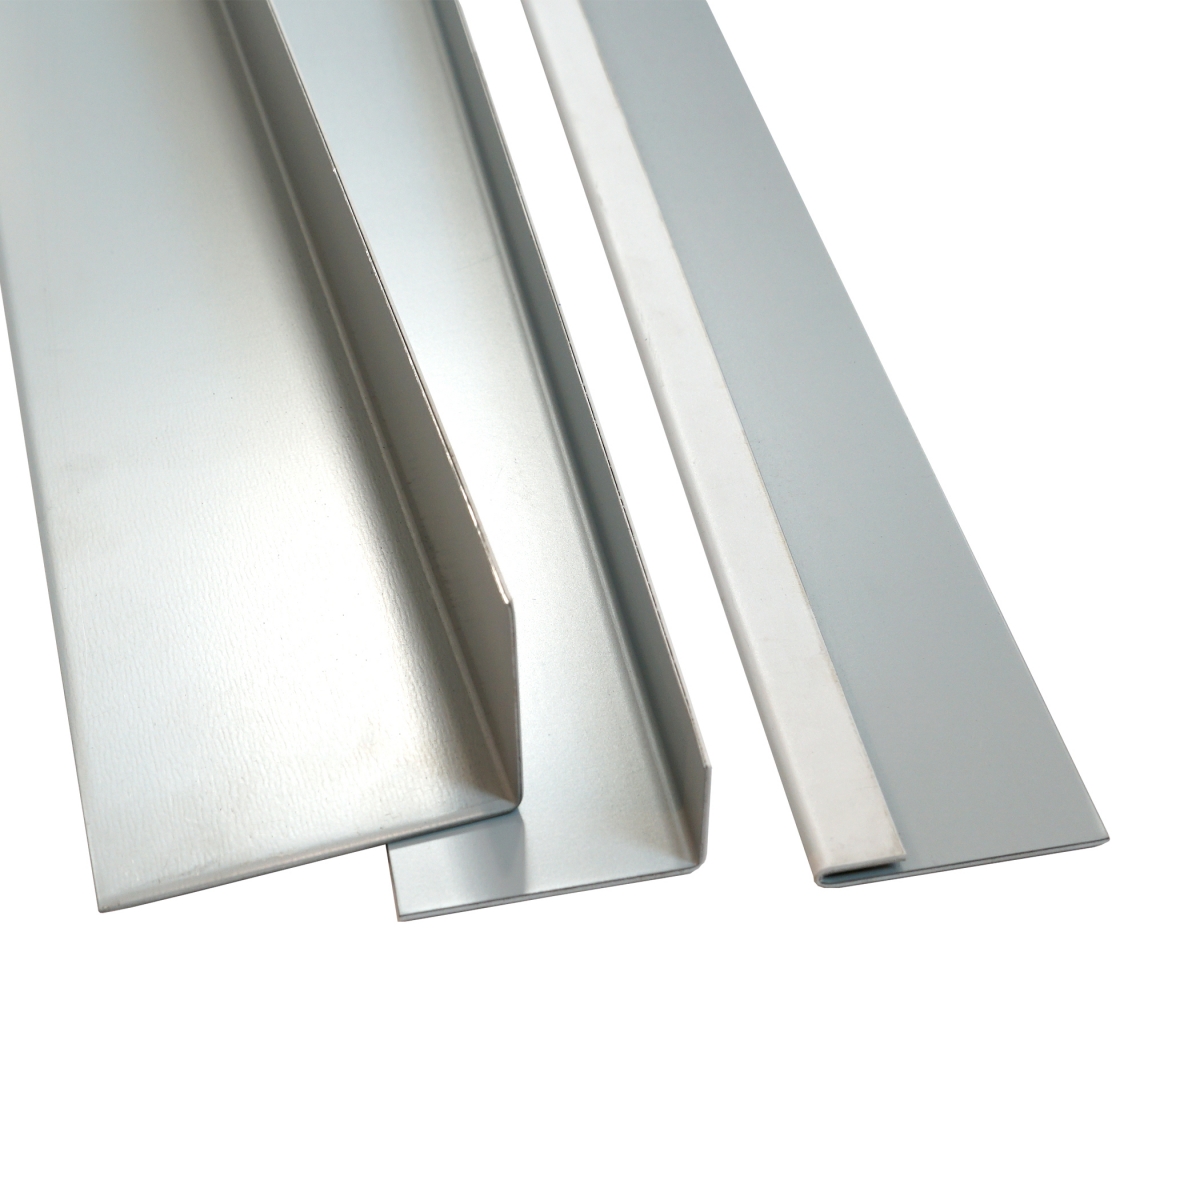 Sheet steel angle 90°, 50x50x2000 mm, outside coating grey Sheet steel angle 90°, 50x50x2000 mm, outside coating grey